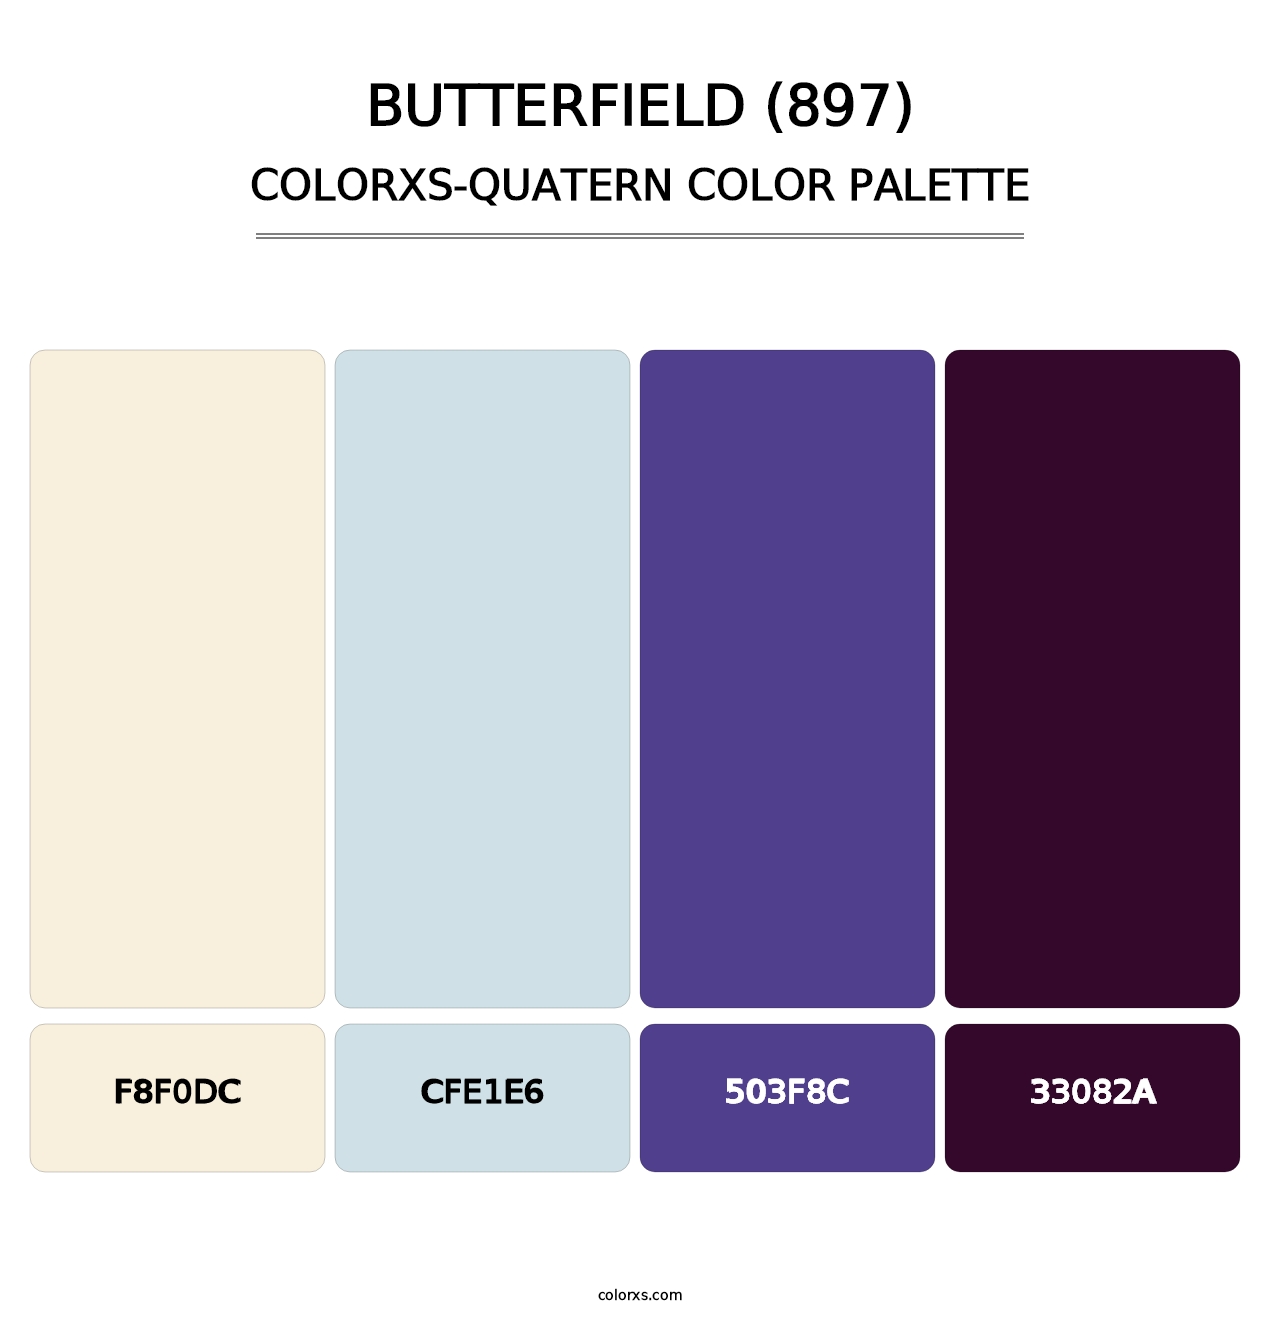 Butterfield (897) - Colorxs Quatern Palette